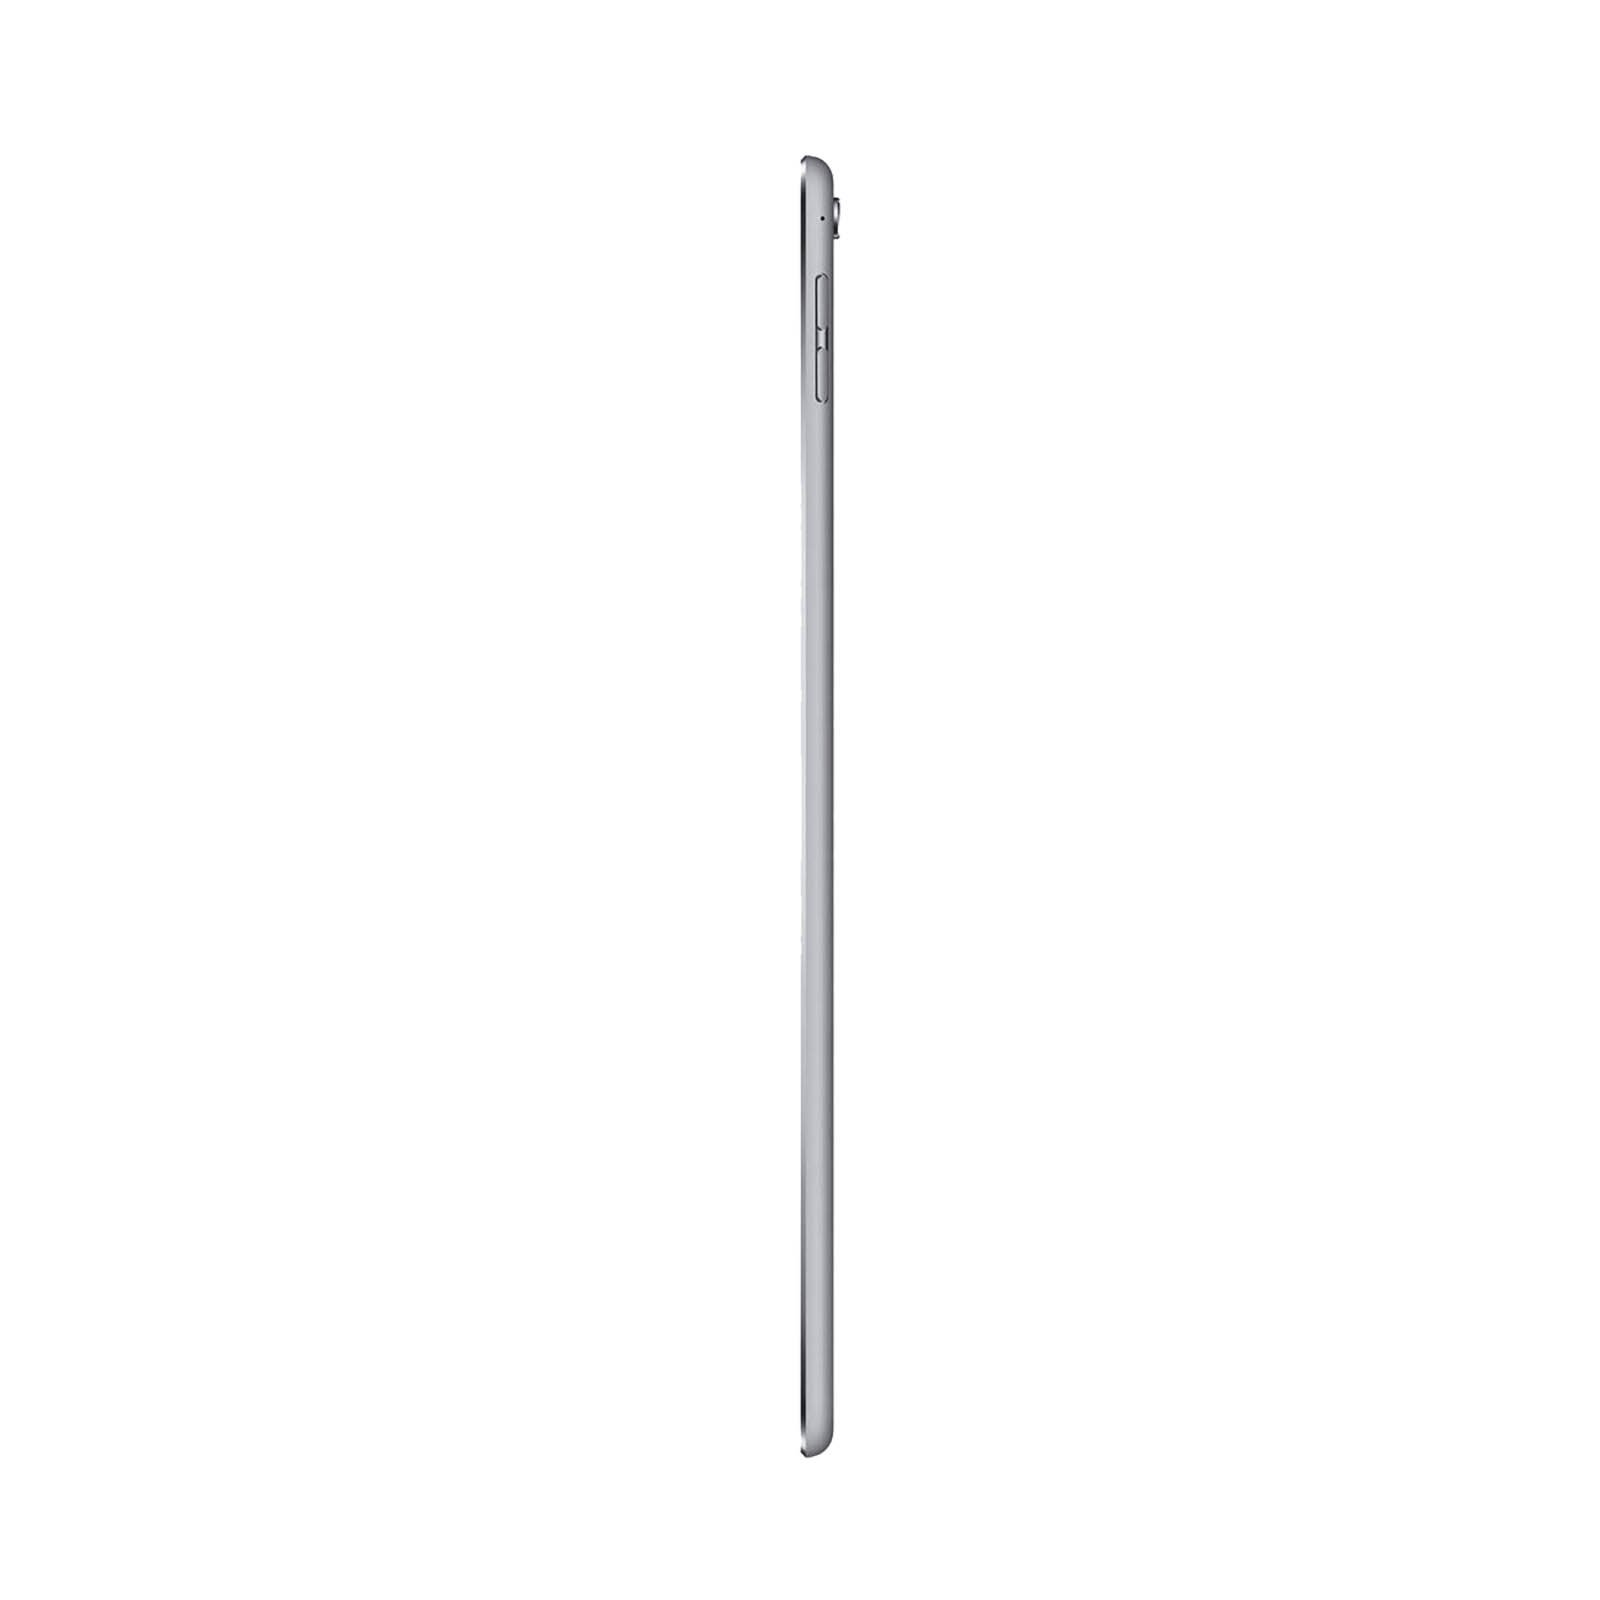 iPad Pro 9.7 Inch 128GB Space Grey Very Good - Unlocked